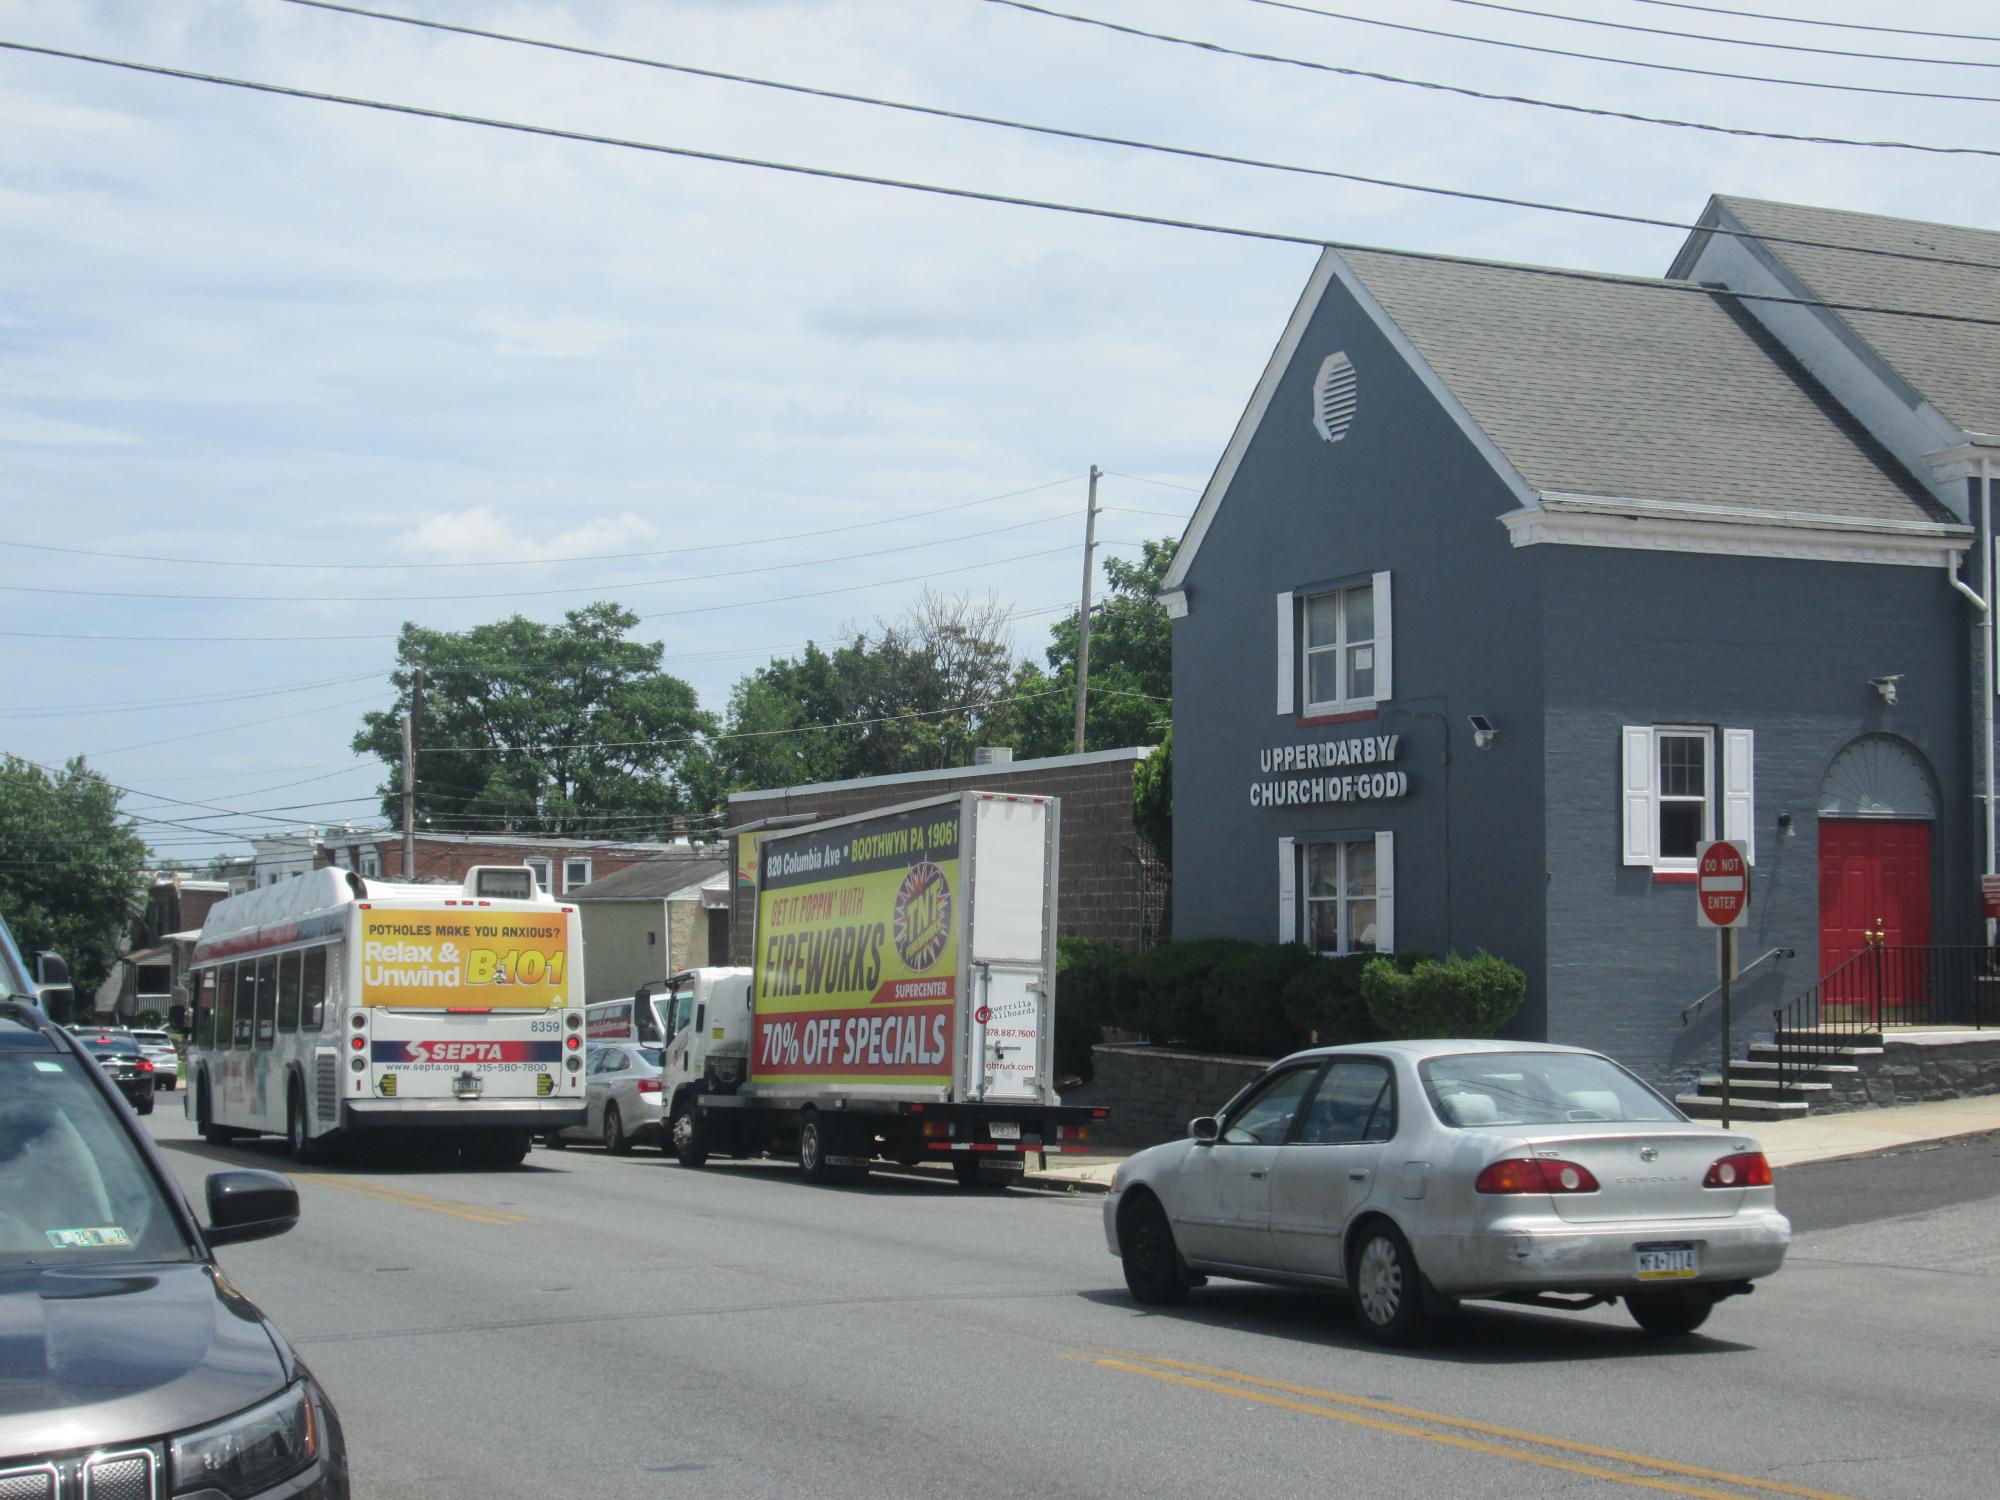 Mobile billboard truck stopped in Upper Darby, PA.